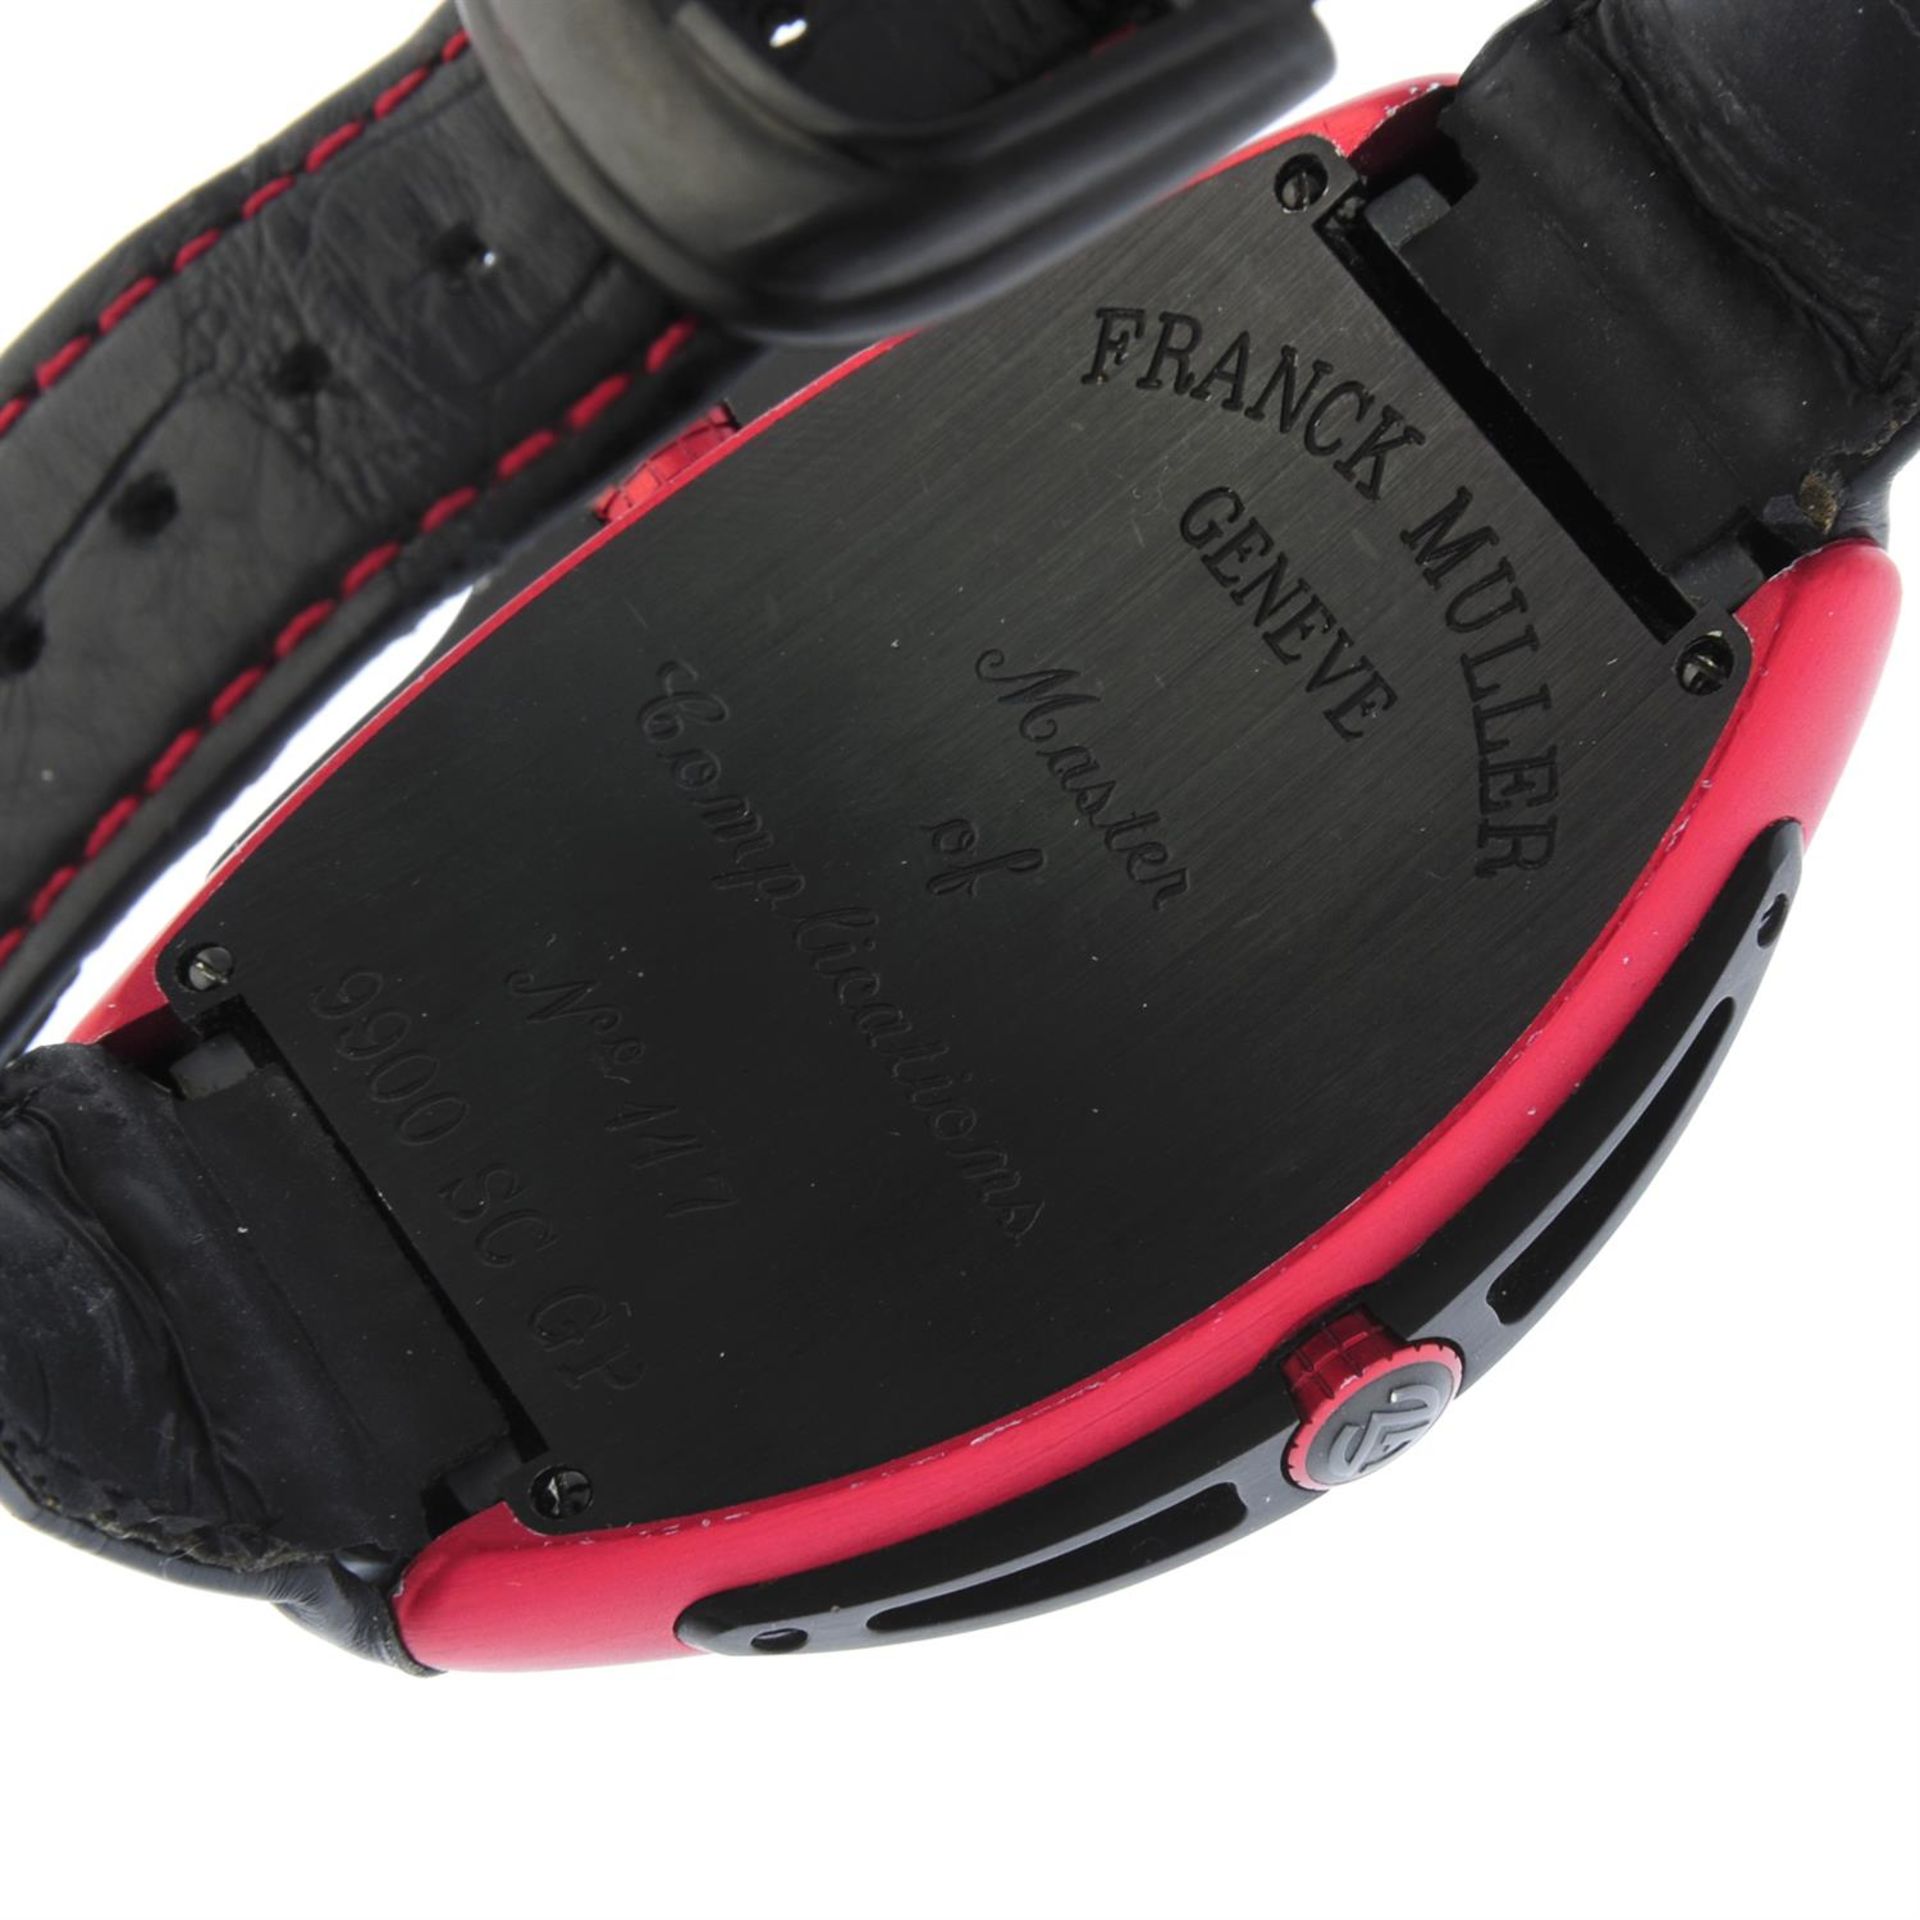 FRANCK MULLER - Bi-colour titanium Conquistador Grand Prix wrist watch, 50x50mm. - Image 4 of 5